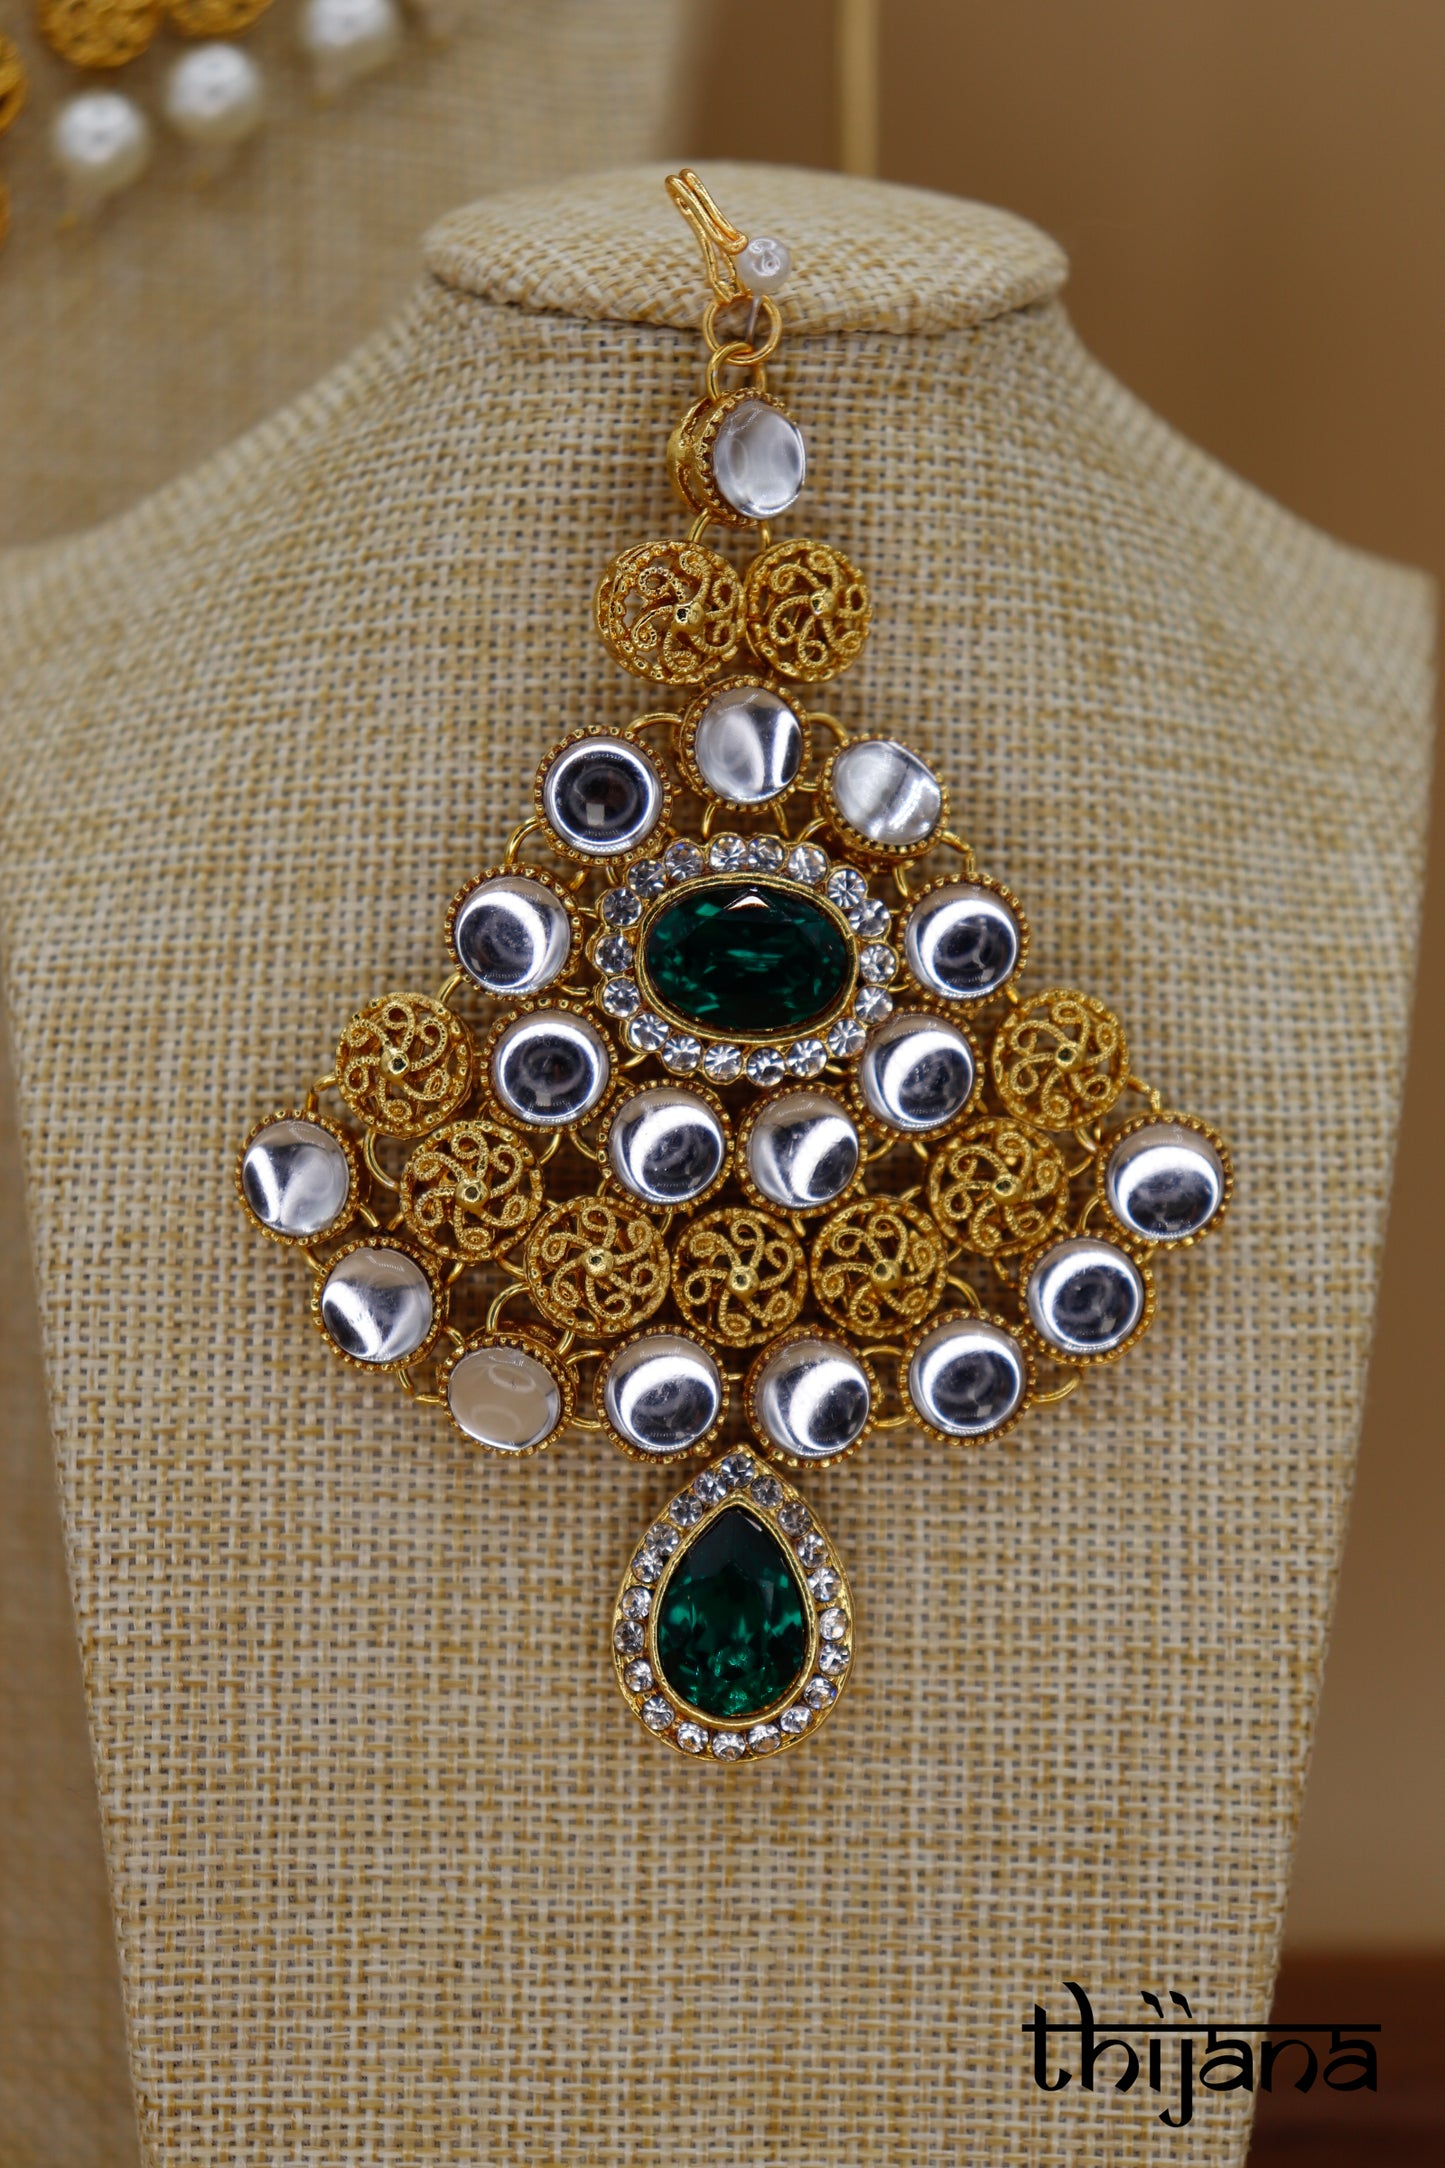 Necklace with matching earrings, maang tikka and pang tikka